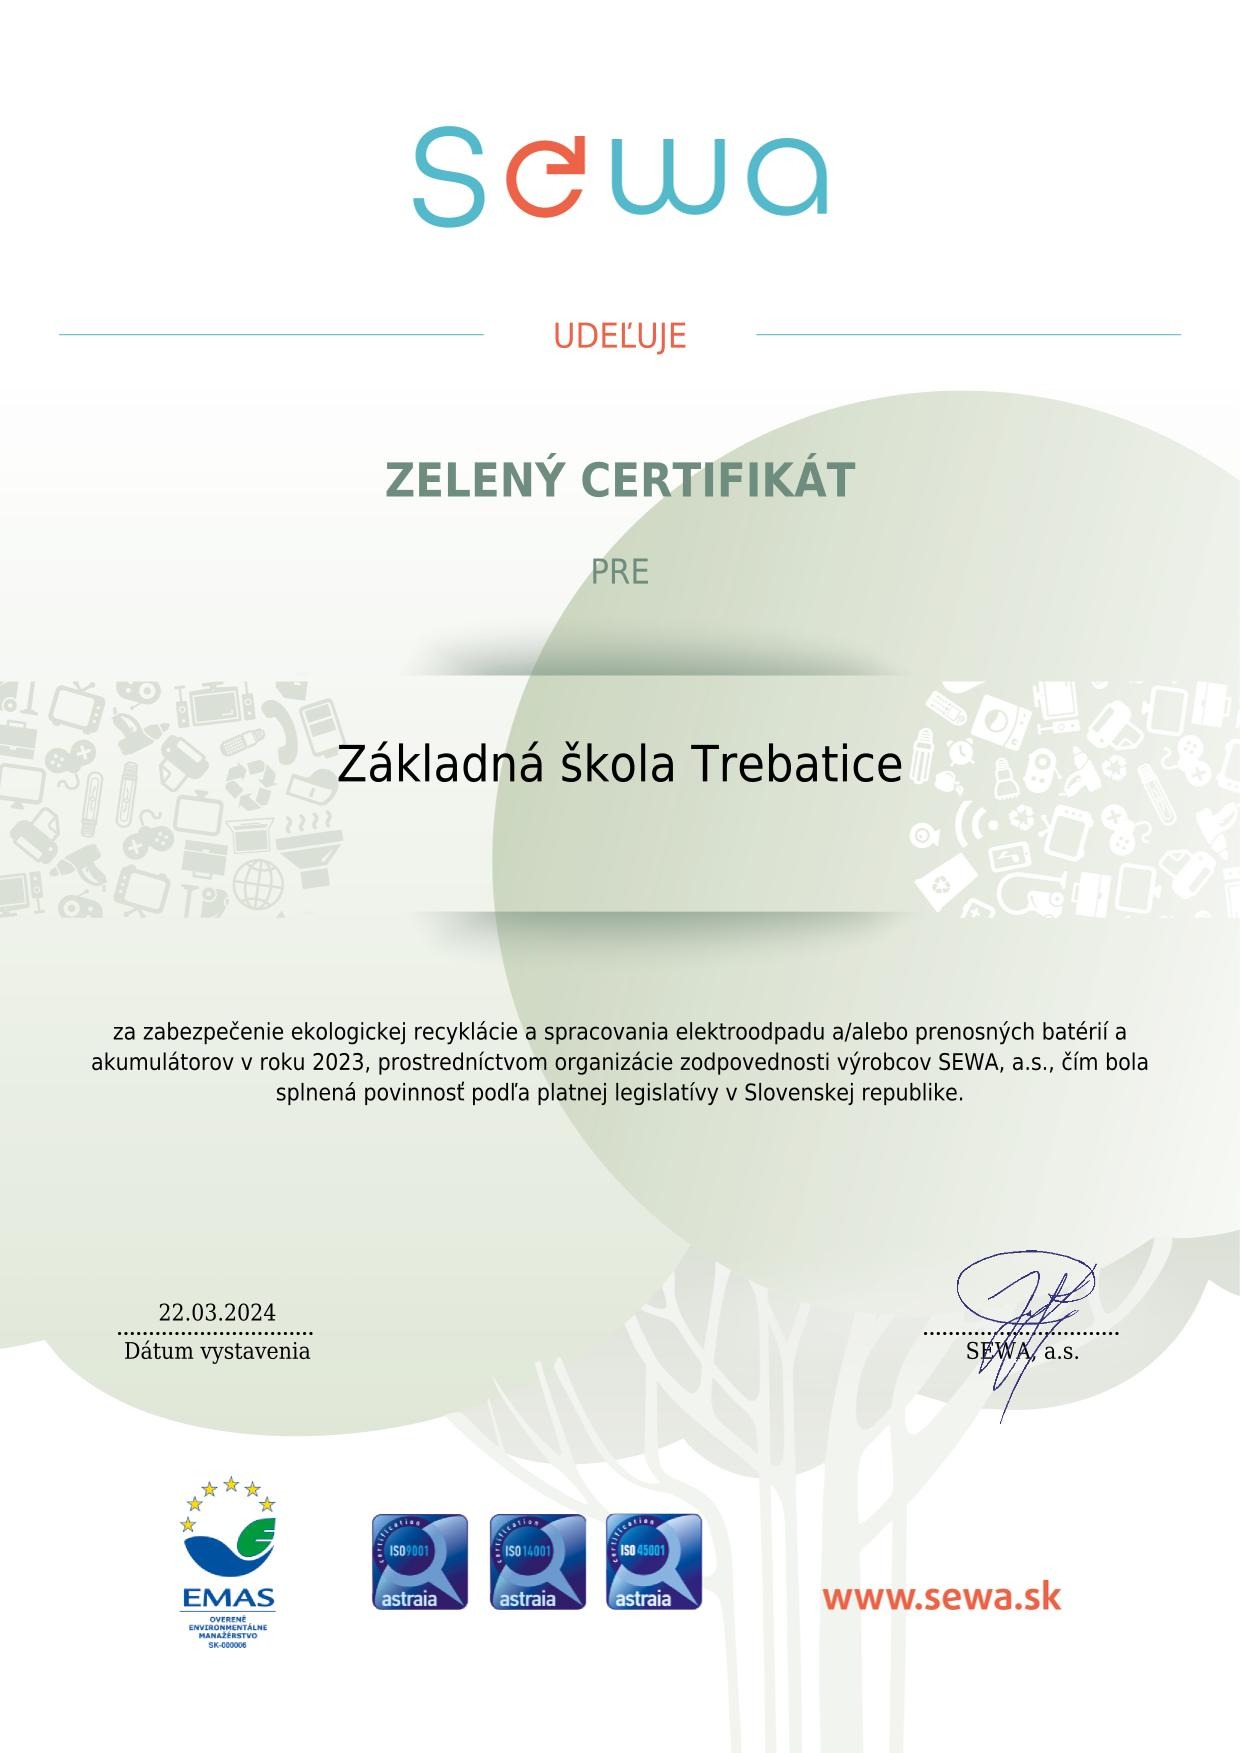 Zelený certifikát pre našu školu - Obrázok 1